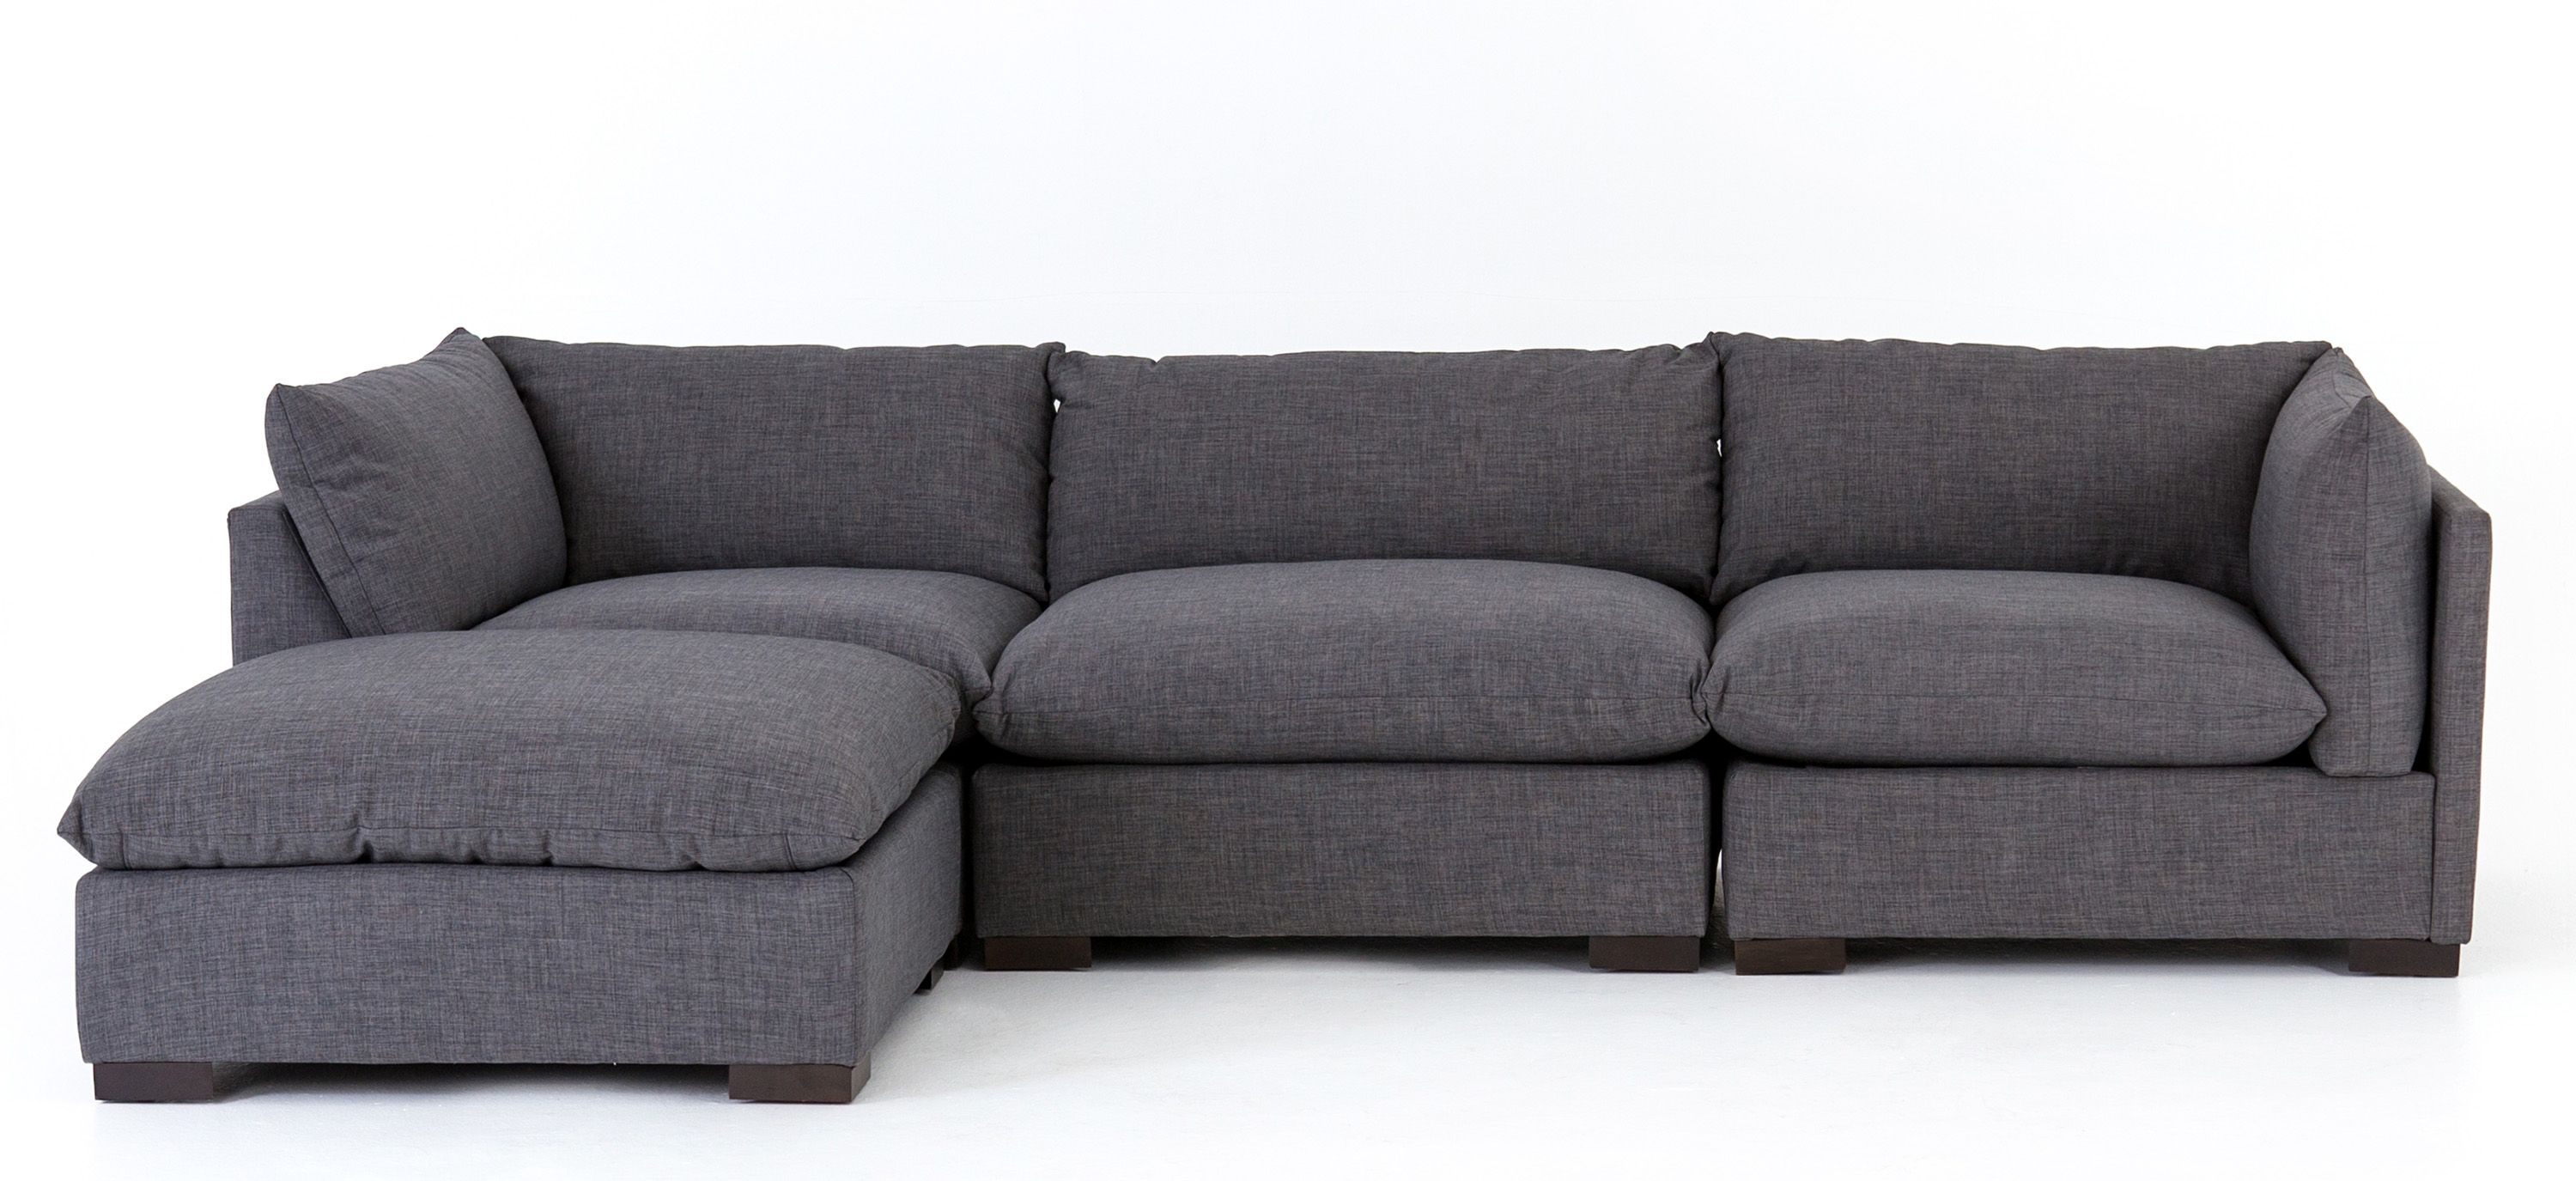 Westwood 4-pc. Modular Sectional Sofa